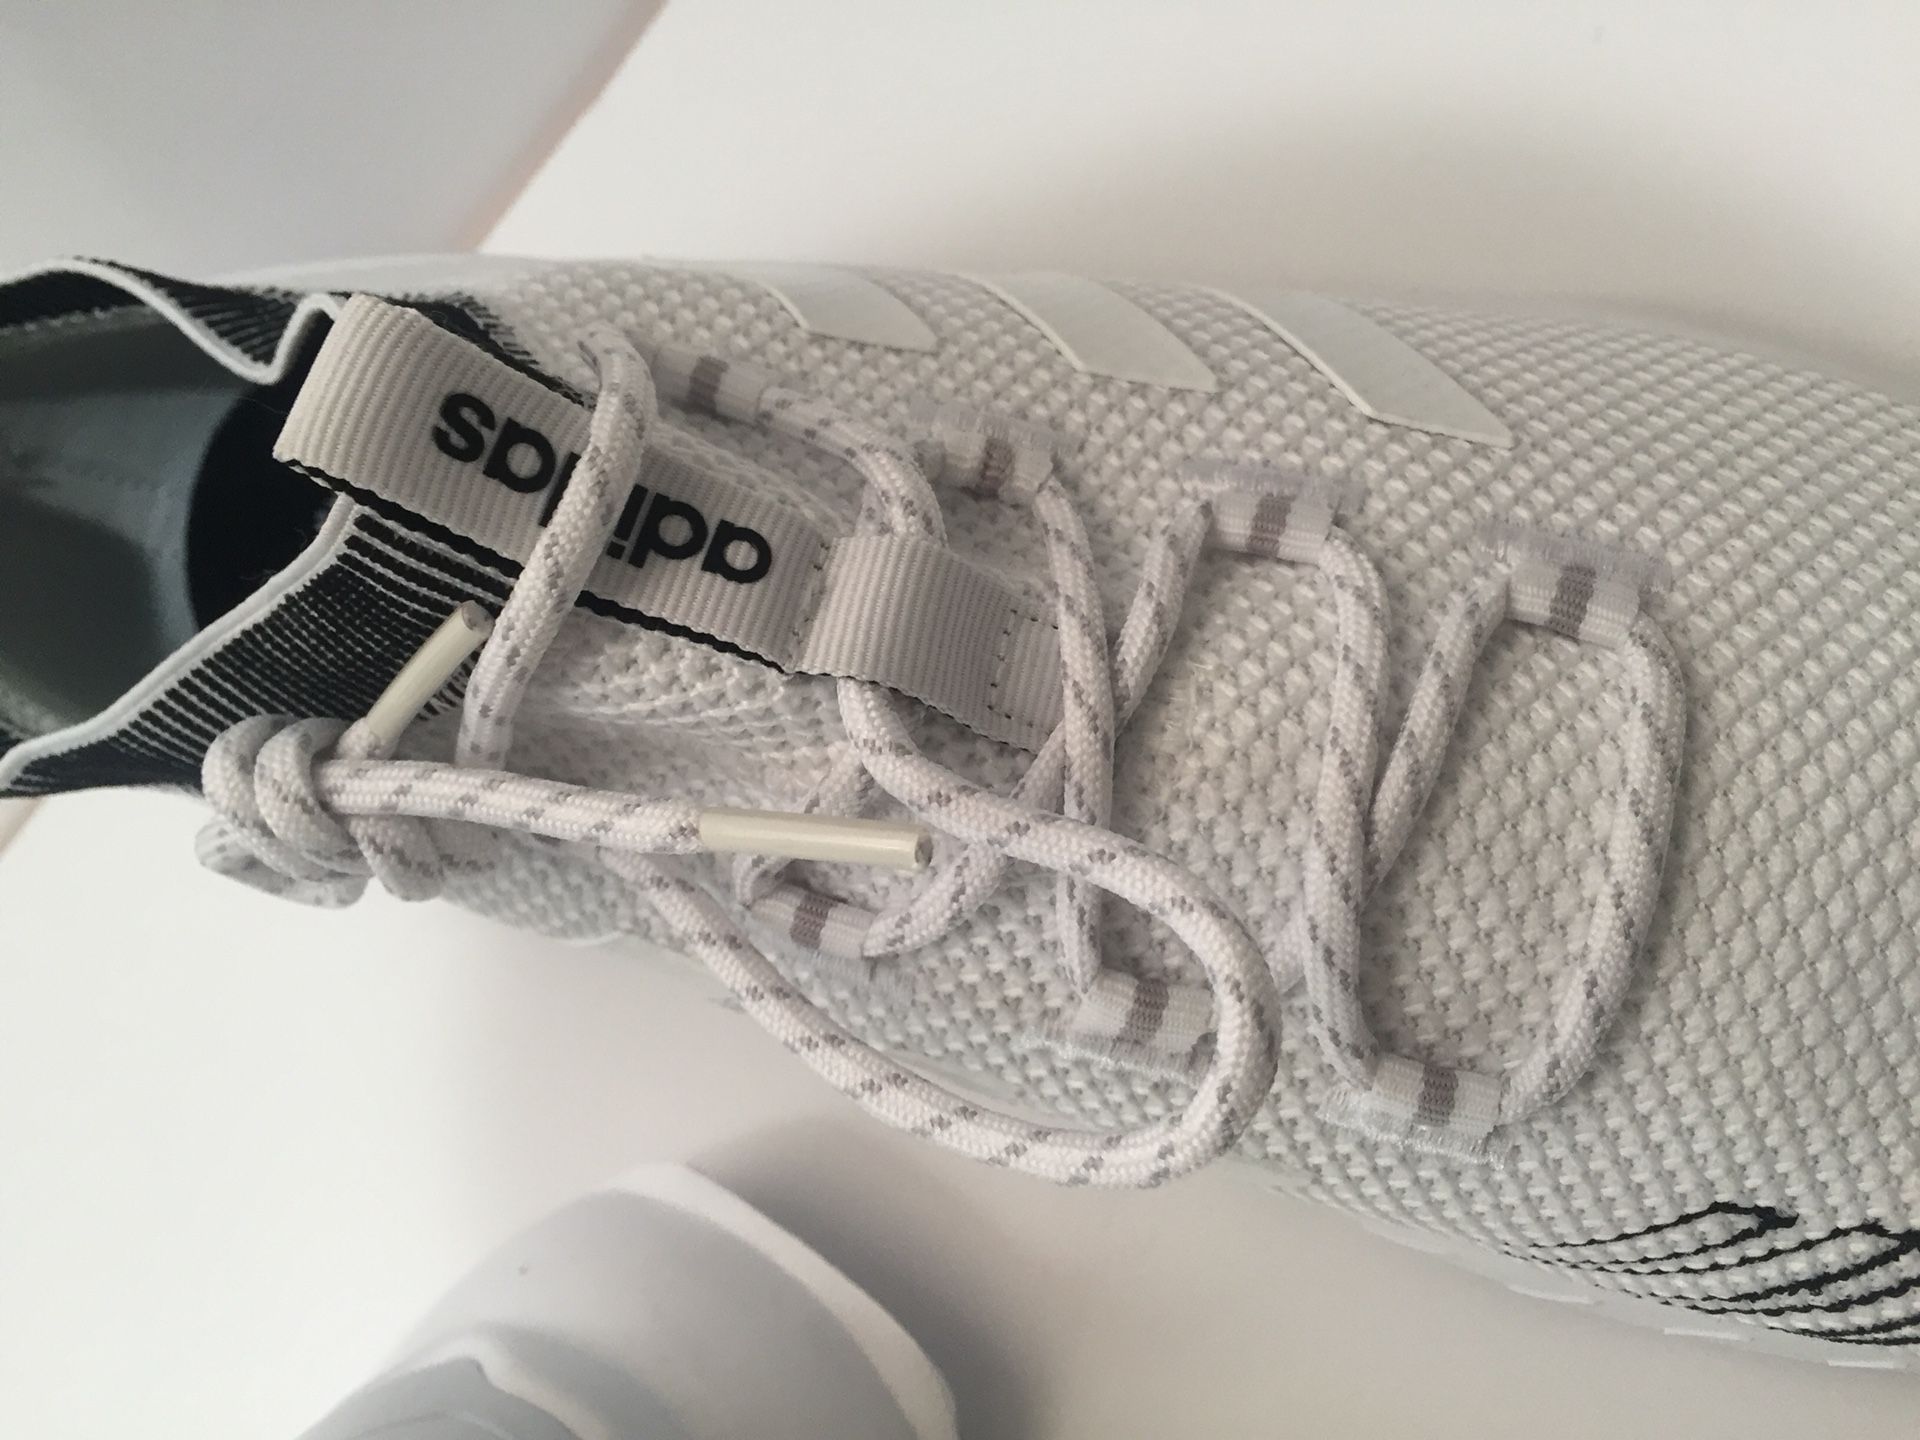 White Adidas shoes